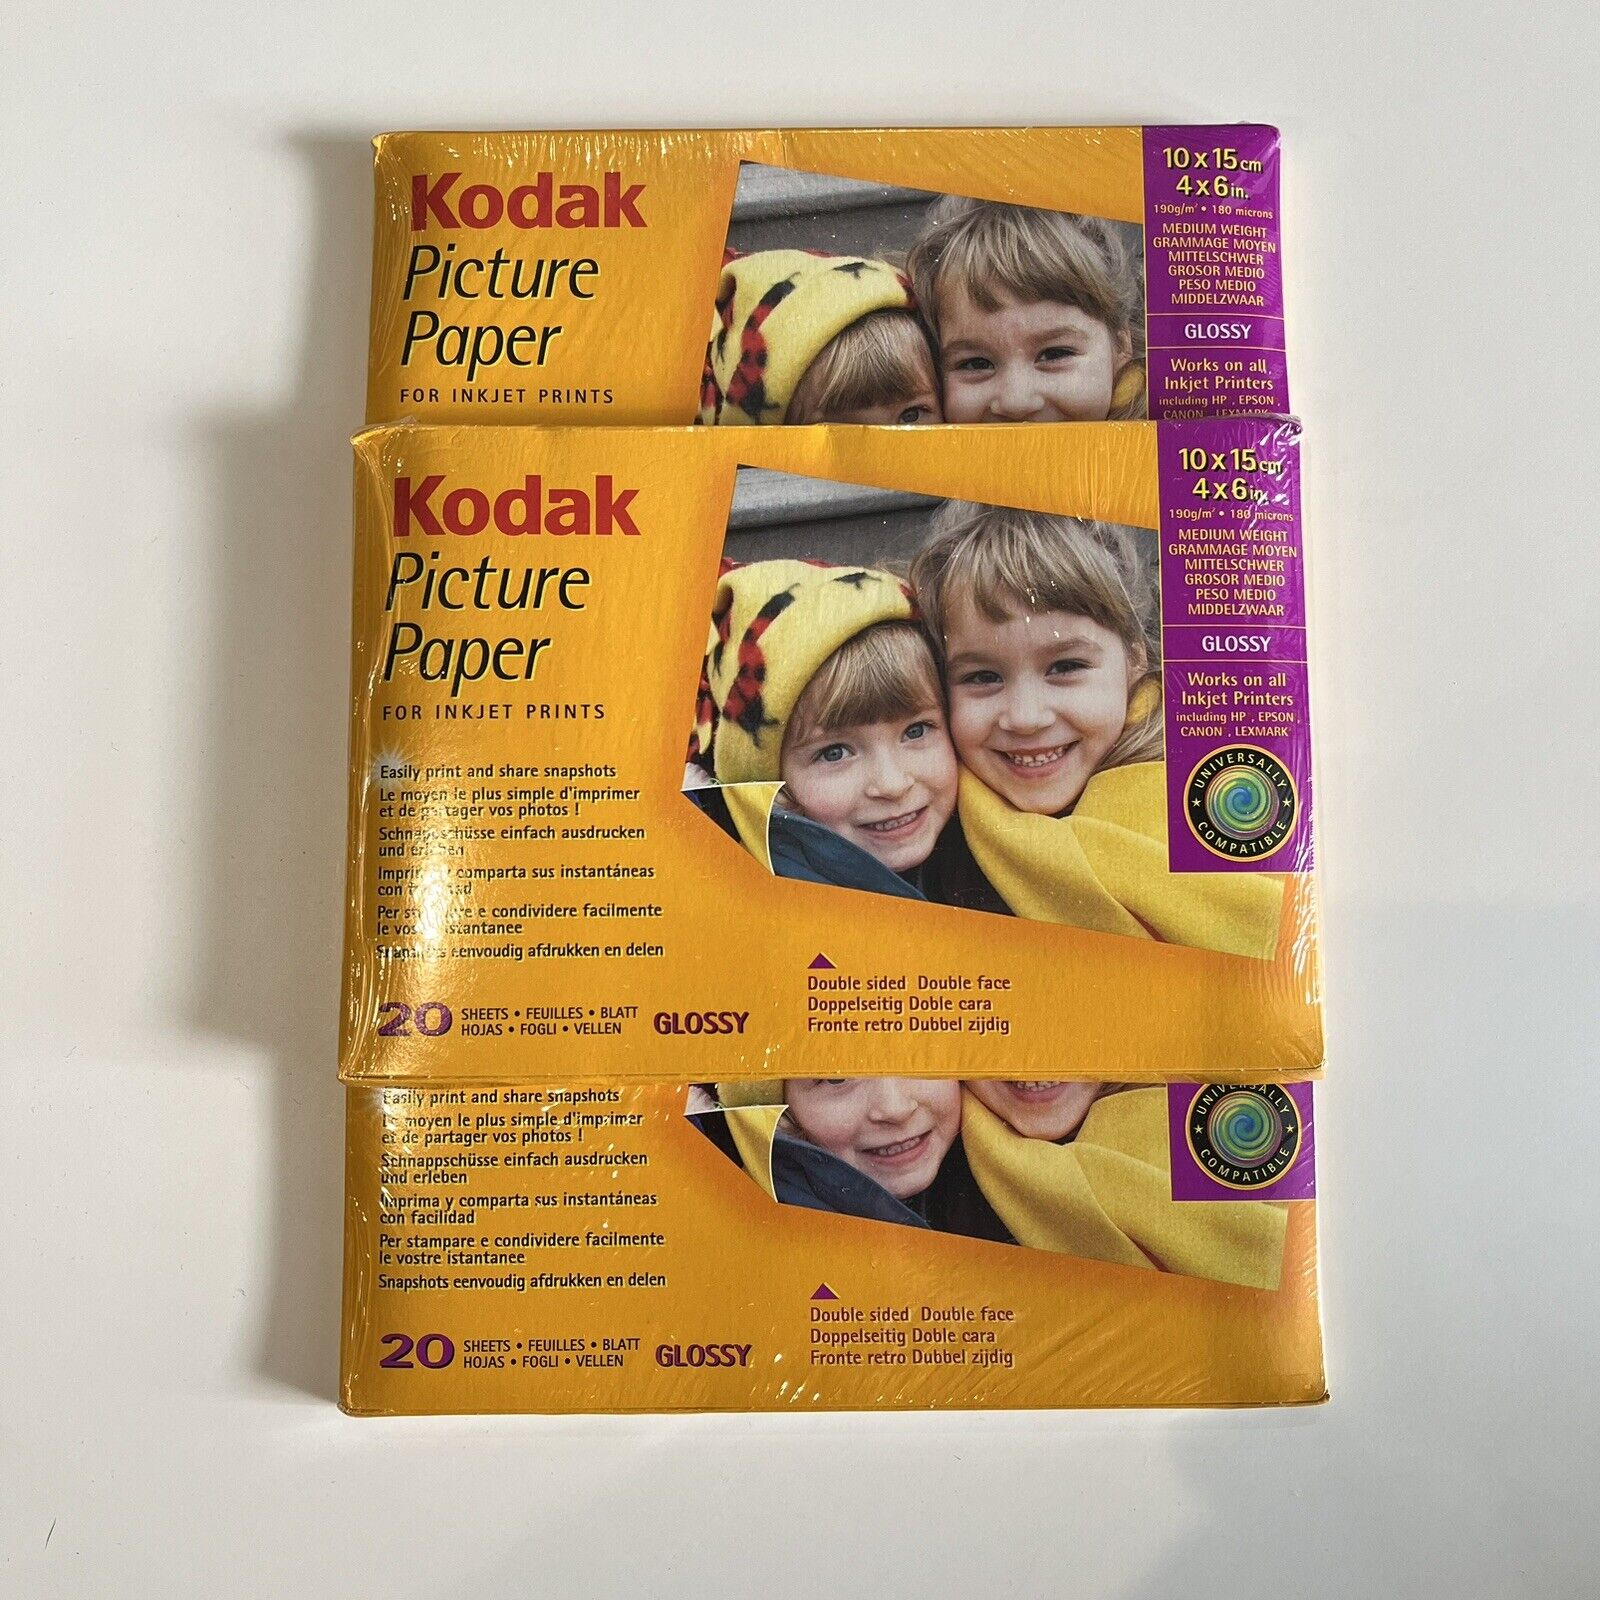 3 x Kodak Picture Paper For Inkjet Printers 10x15cm 6"x4" Glossy 20 Sheets Photo